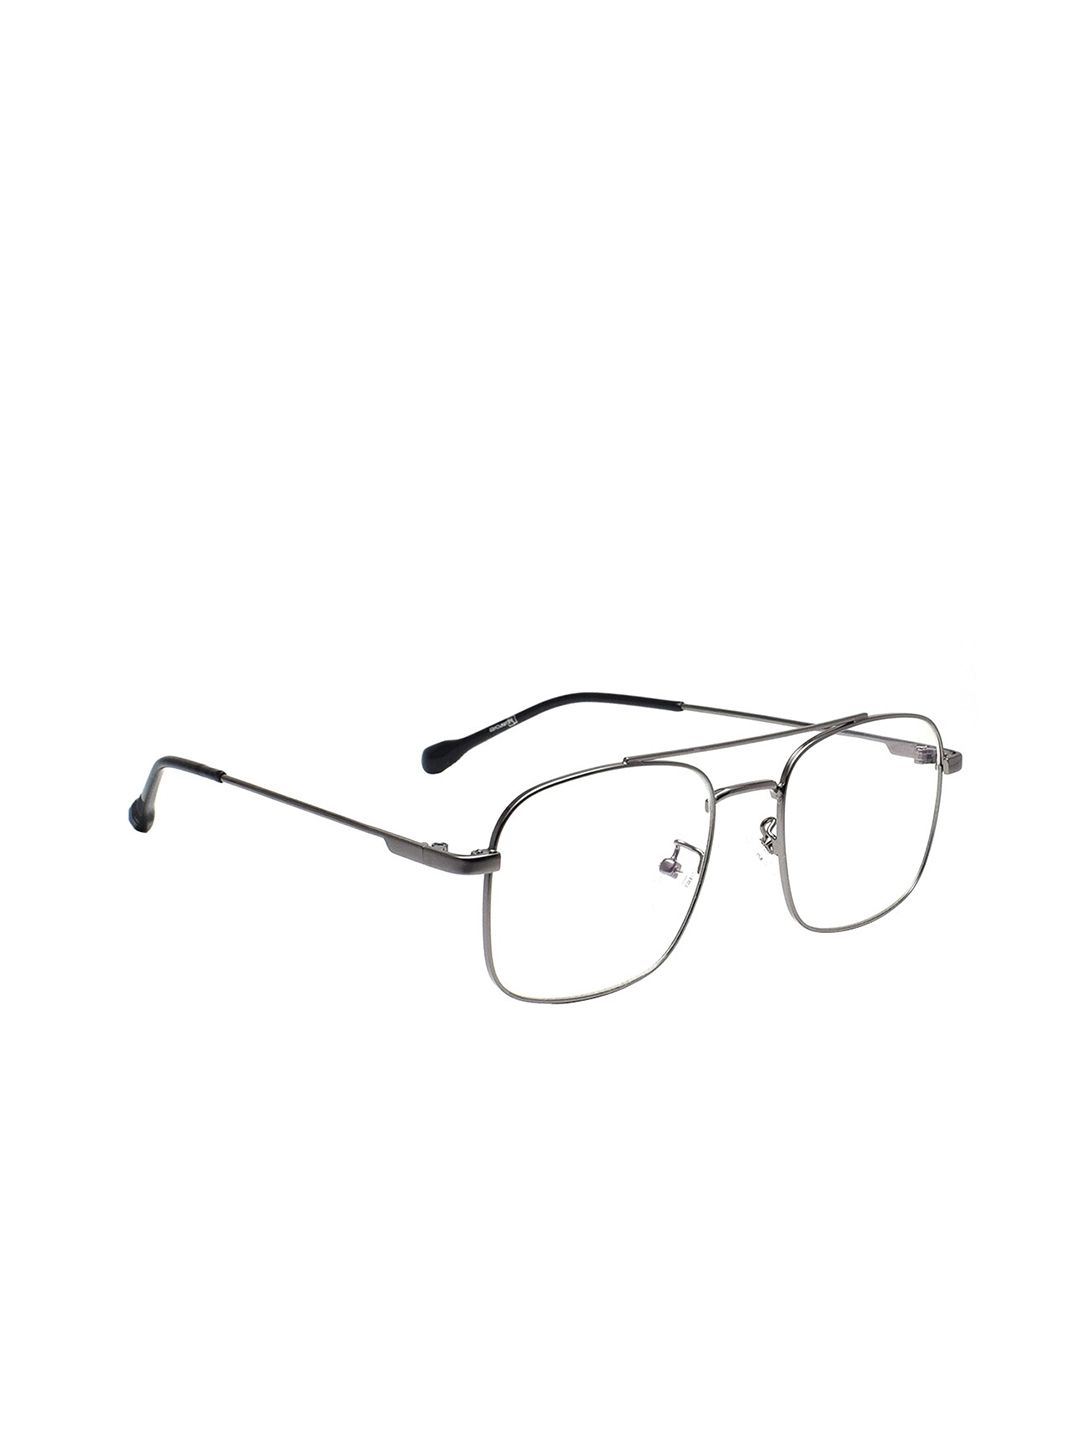 Peter Jones Eyewear Unisex Black Full Rim Square Frames Computer Glasses Price in India